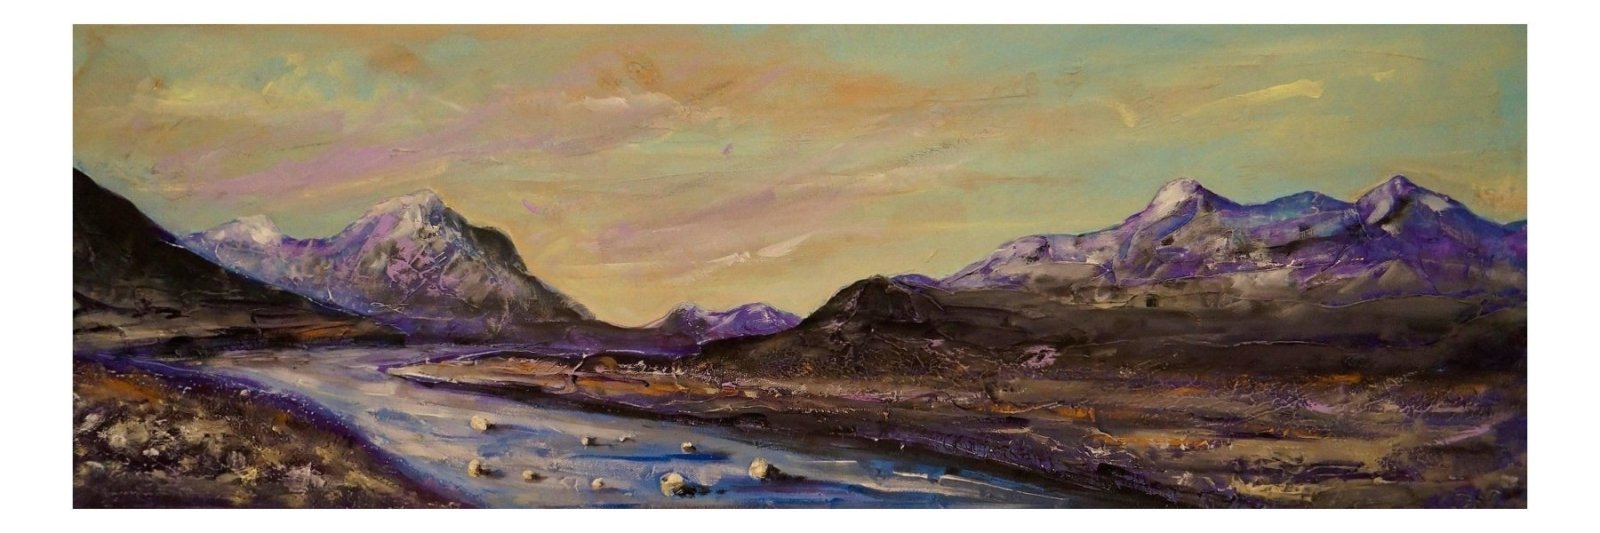 Cuillin Winter Skye-Panoramic Prints-Skye Art Gallery-Paintings, Prints, Homeware, Art Gifts From Scotland By Scottish Artist Kevin Hunter